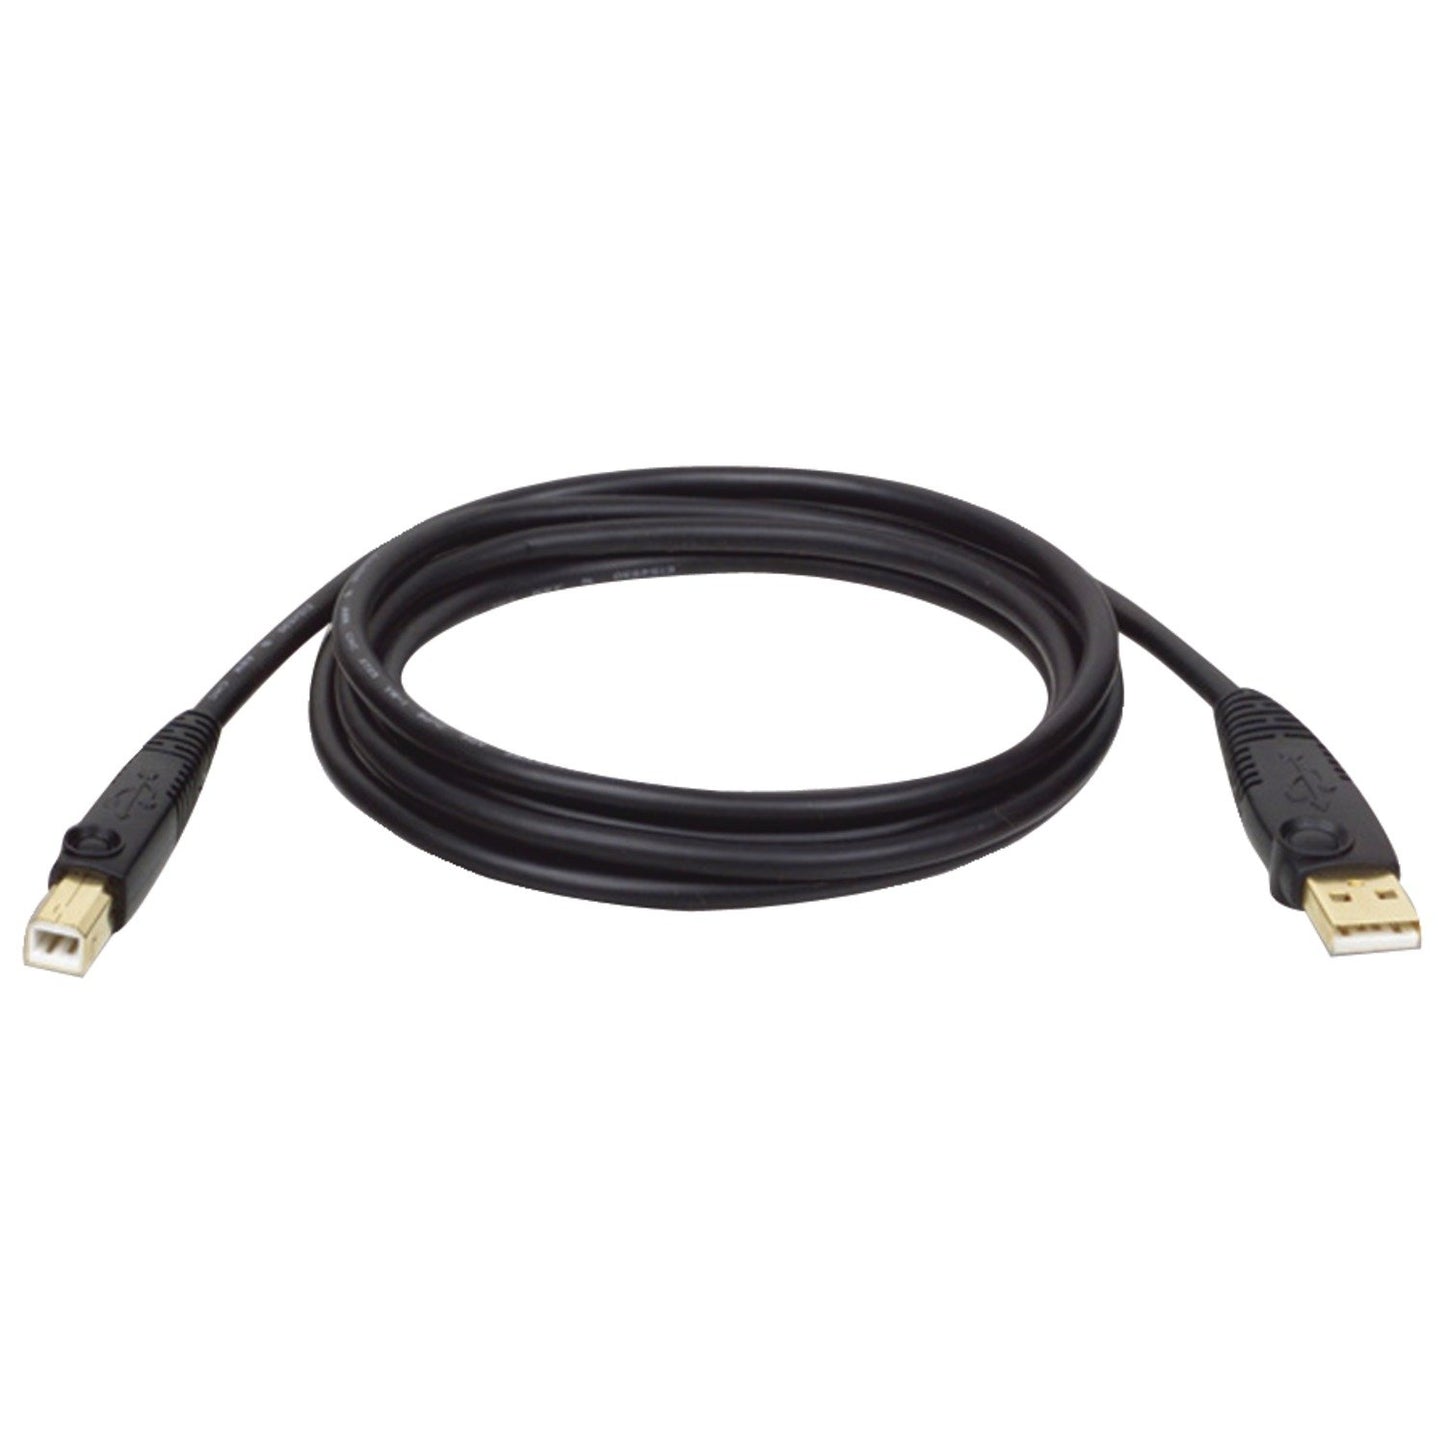 Tripp Lite U022015 A-Male to B-Male USB 2.0 Cable (15ft)